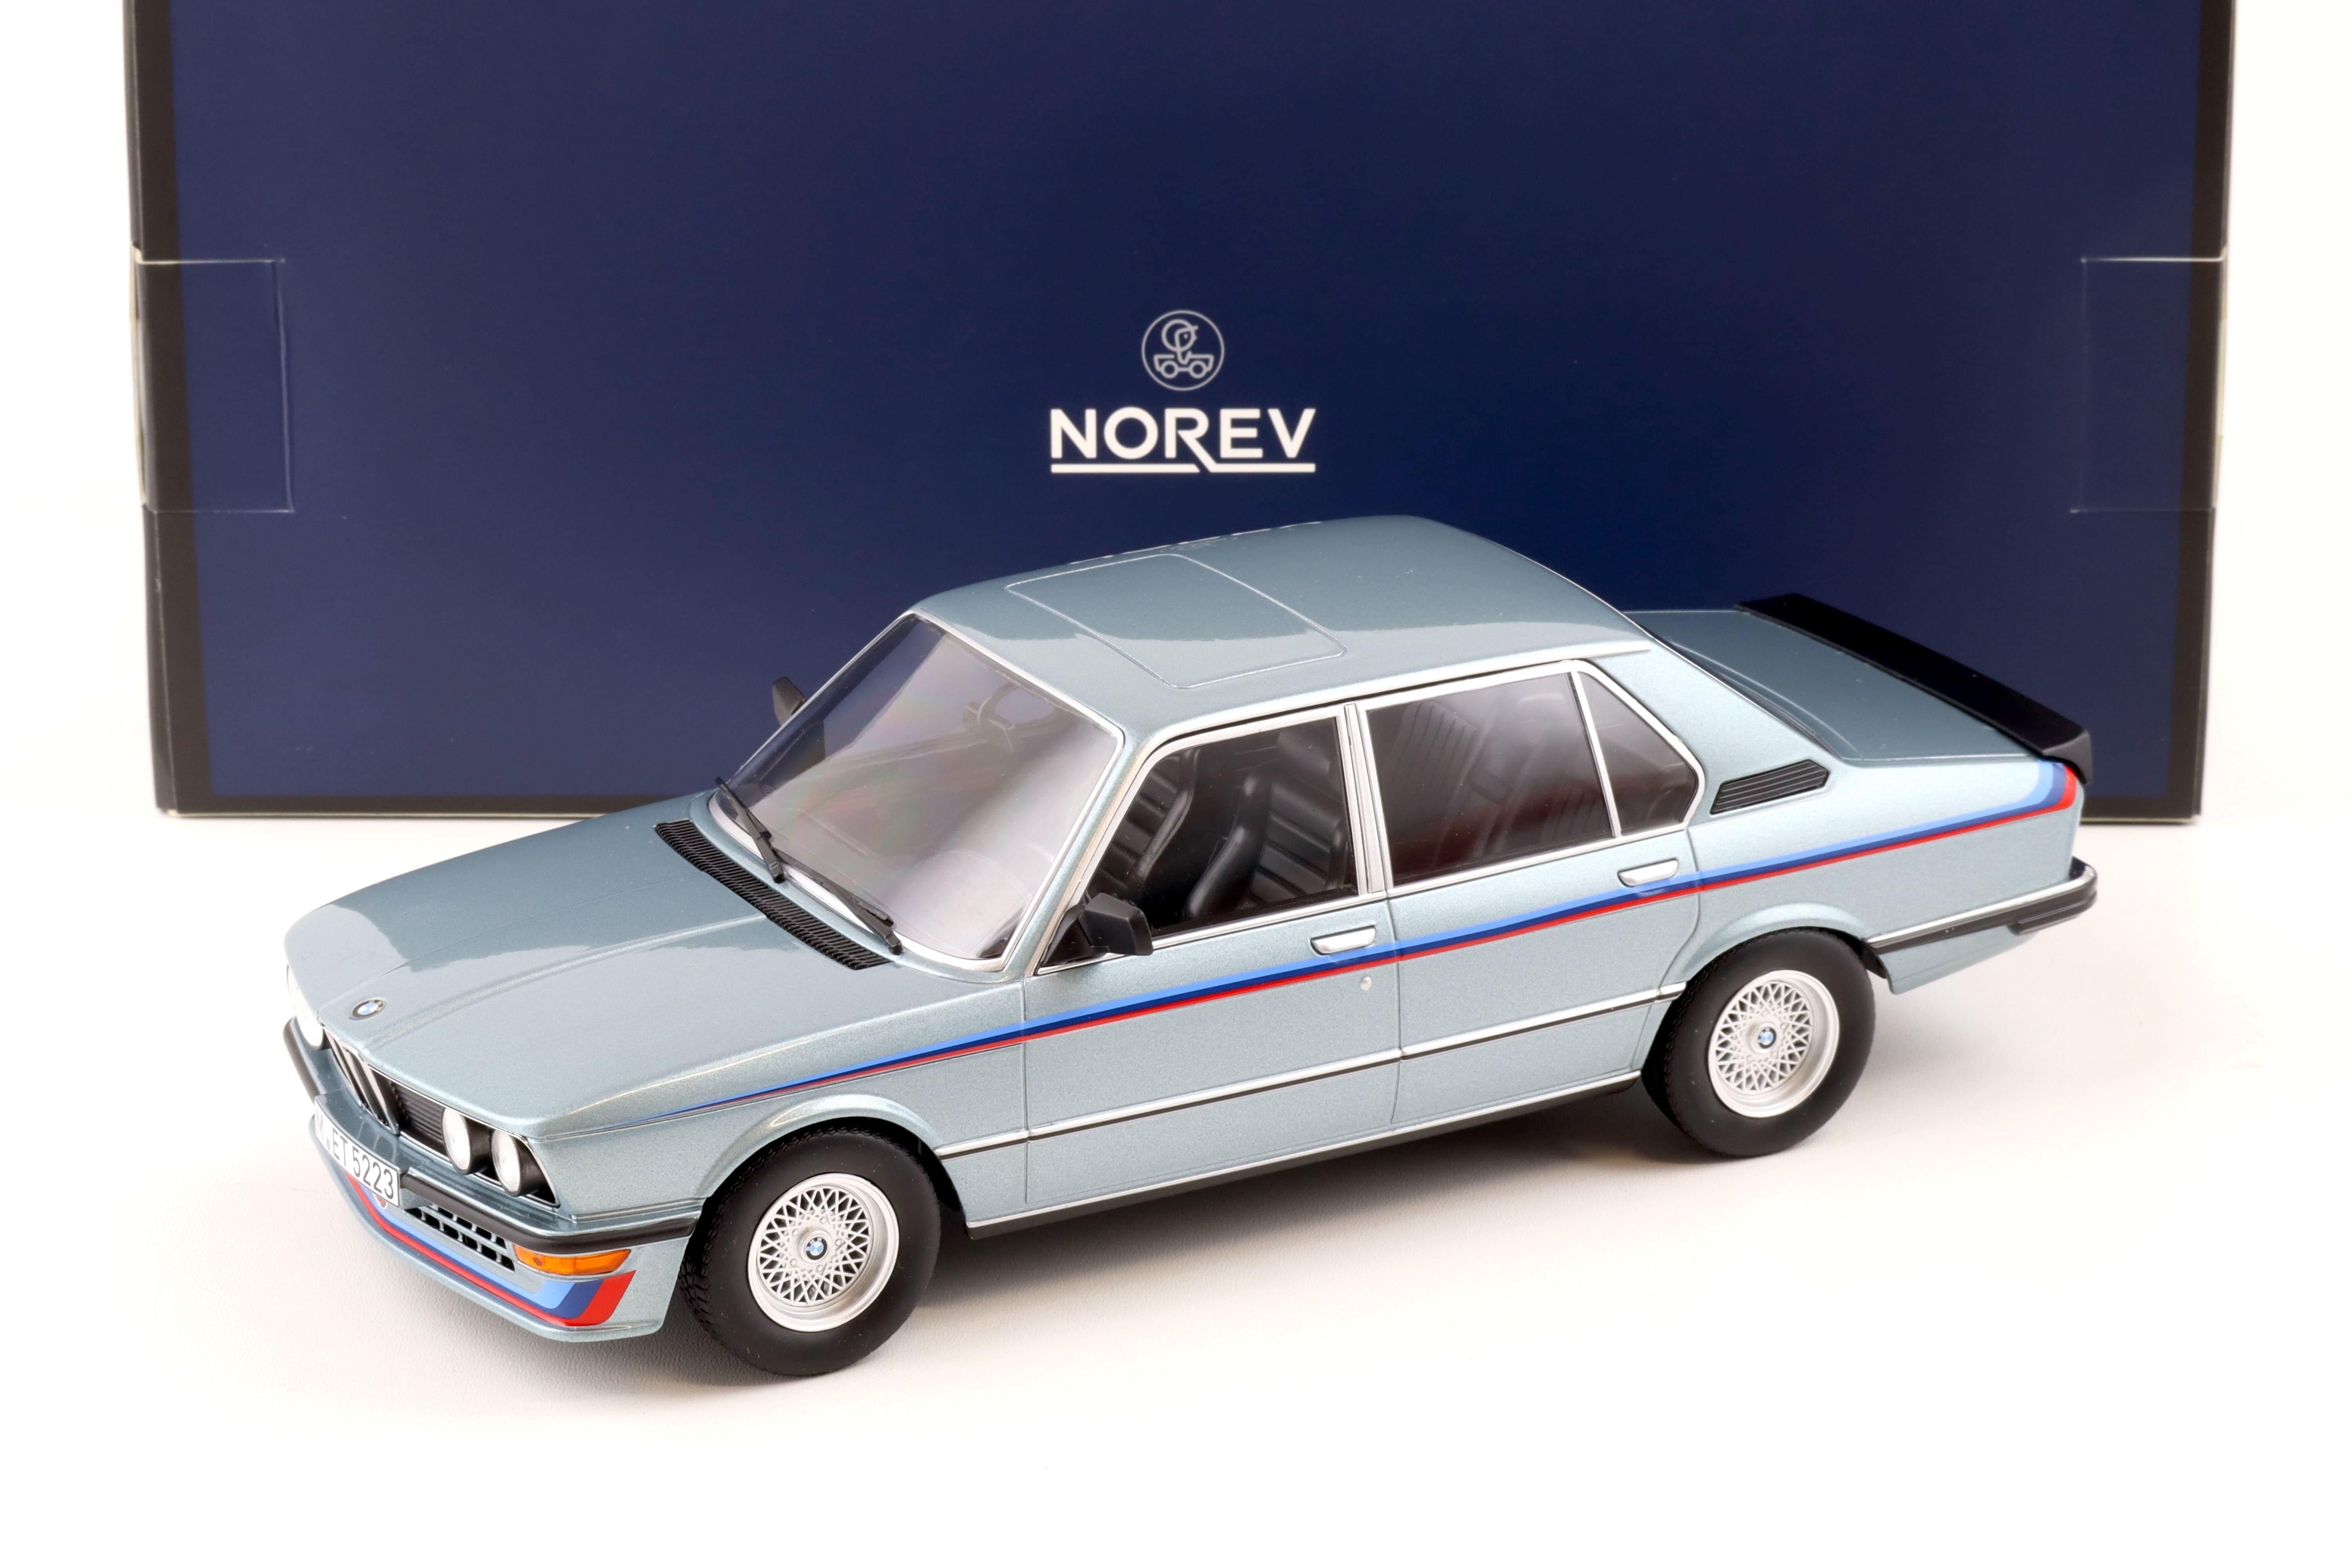 1:18 Norev BMW M535i E28 Limousine 1980 blue met. with stripes - Limited 500 pcs.